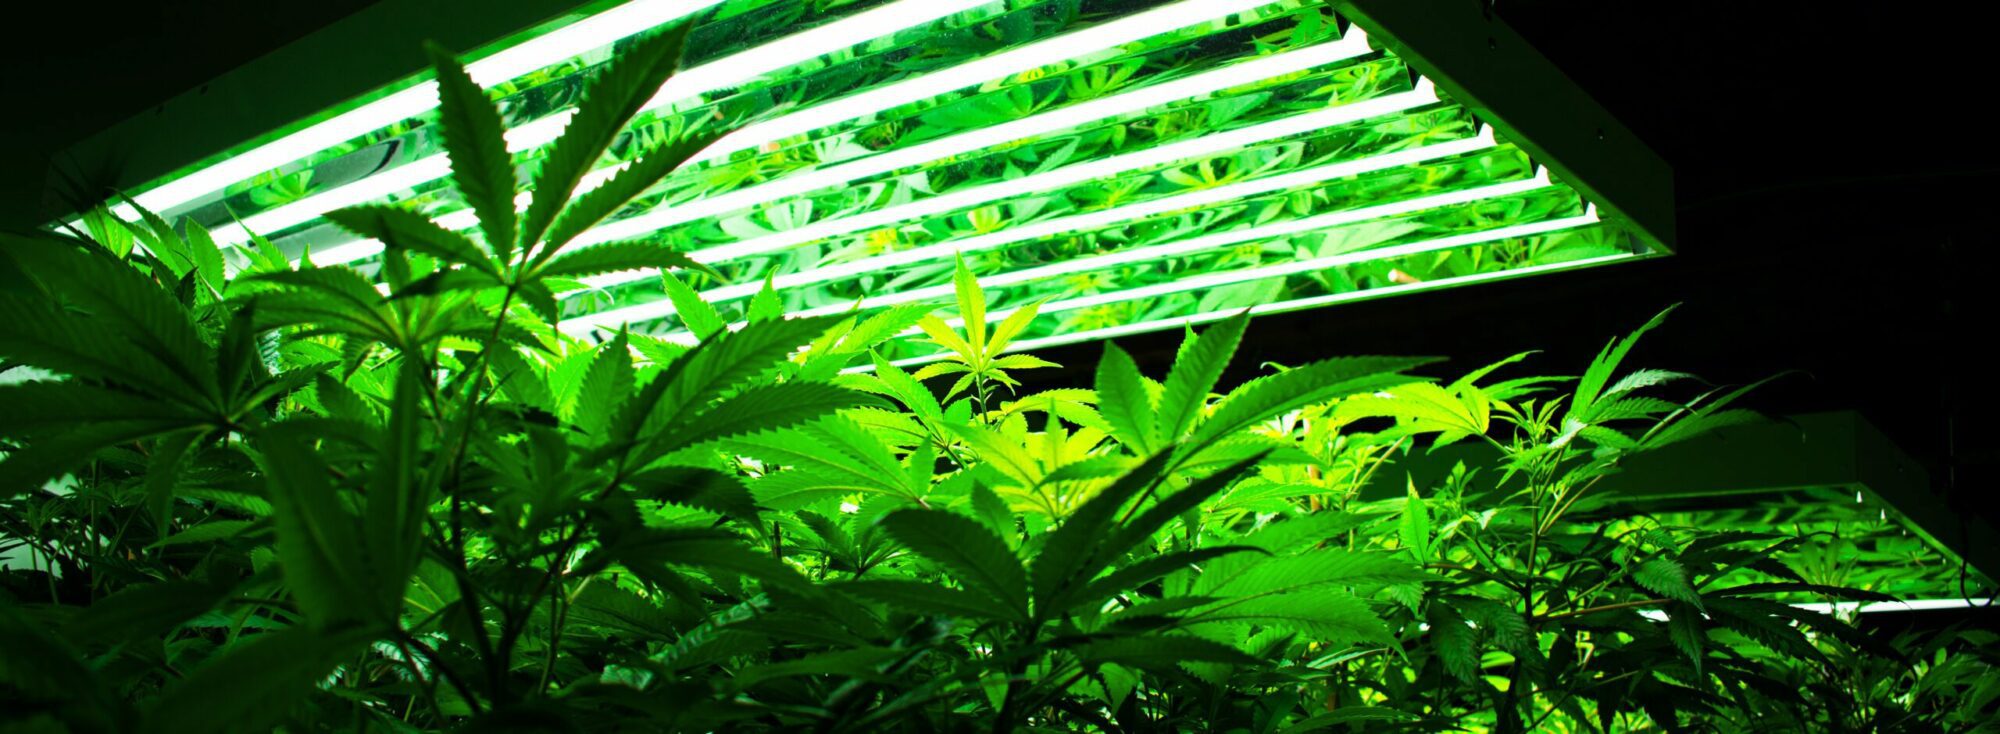 Marijuana plants sitting underneath grow lights